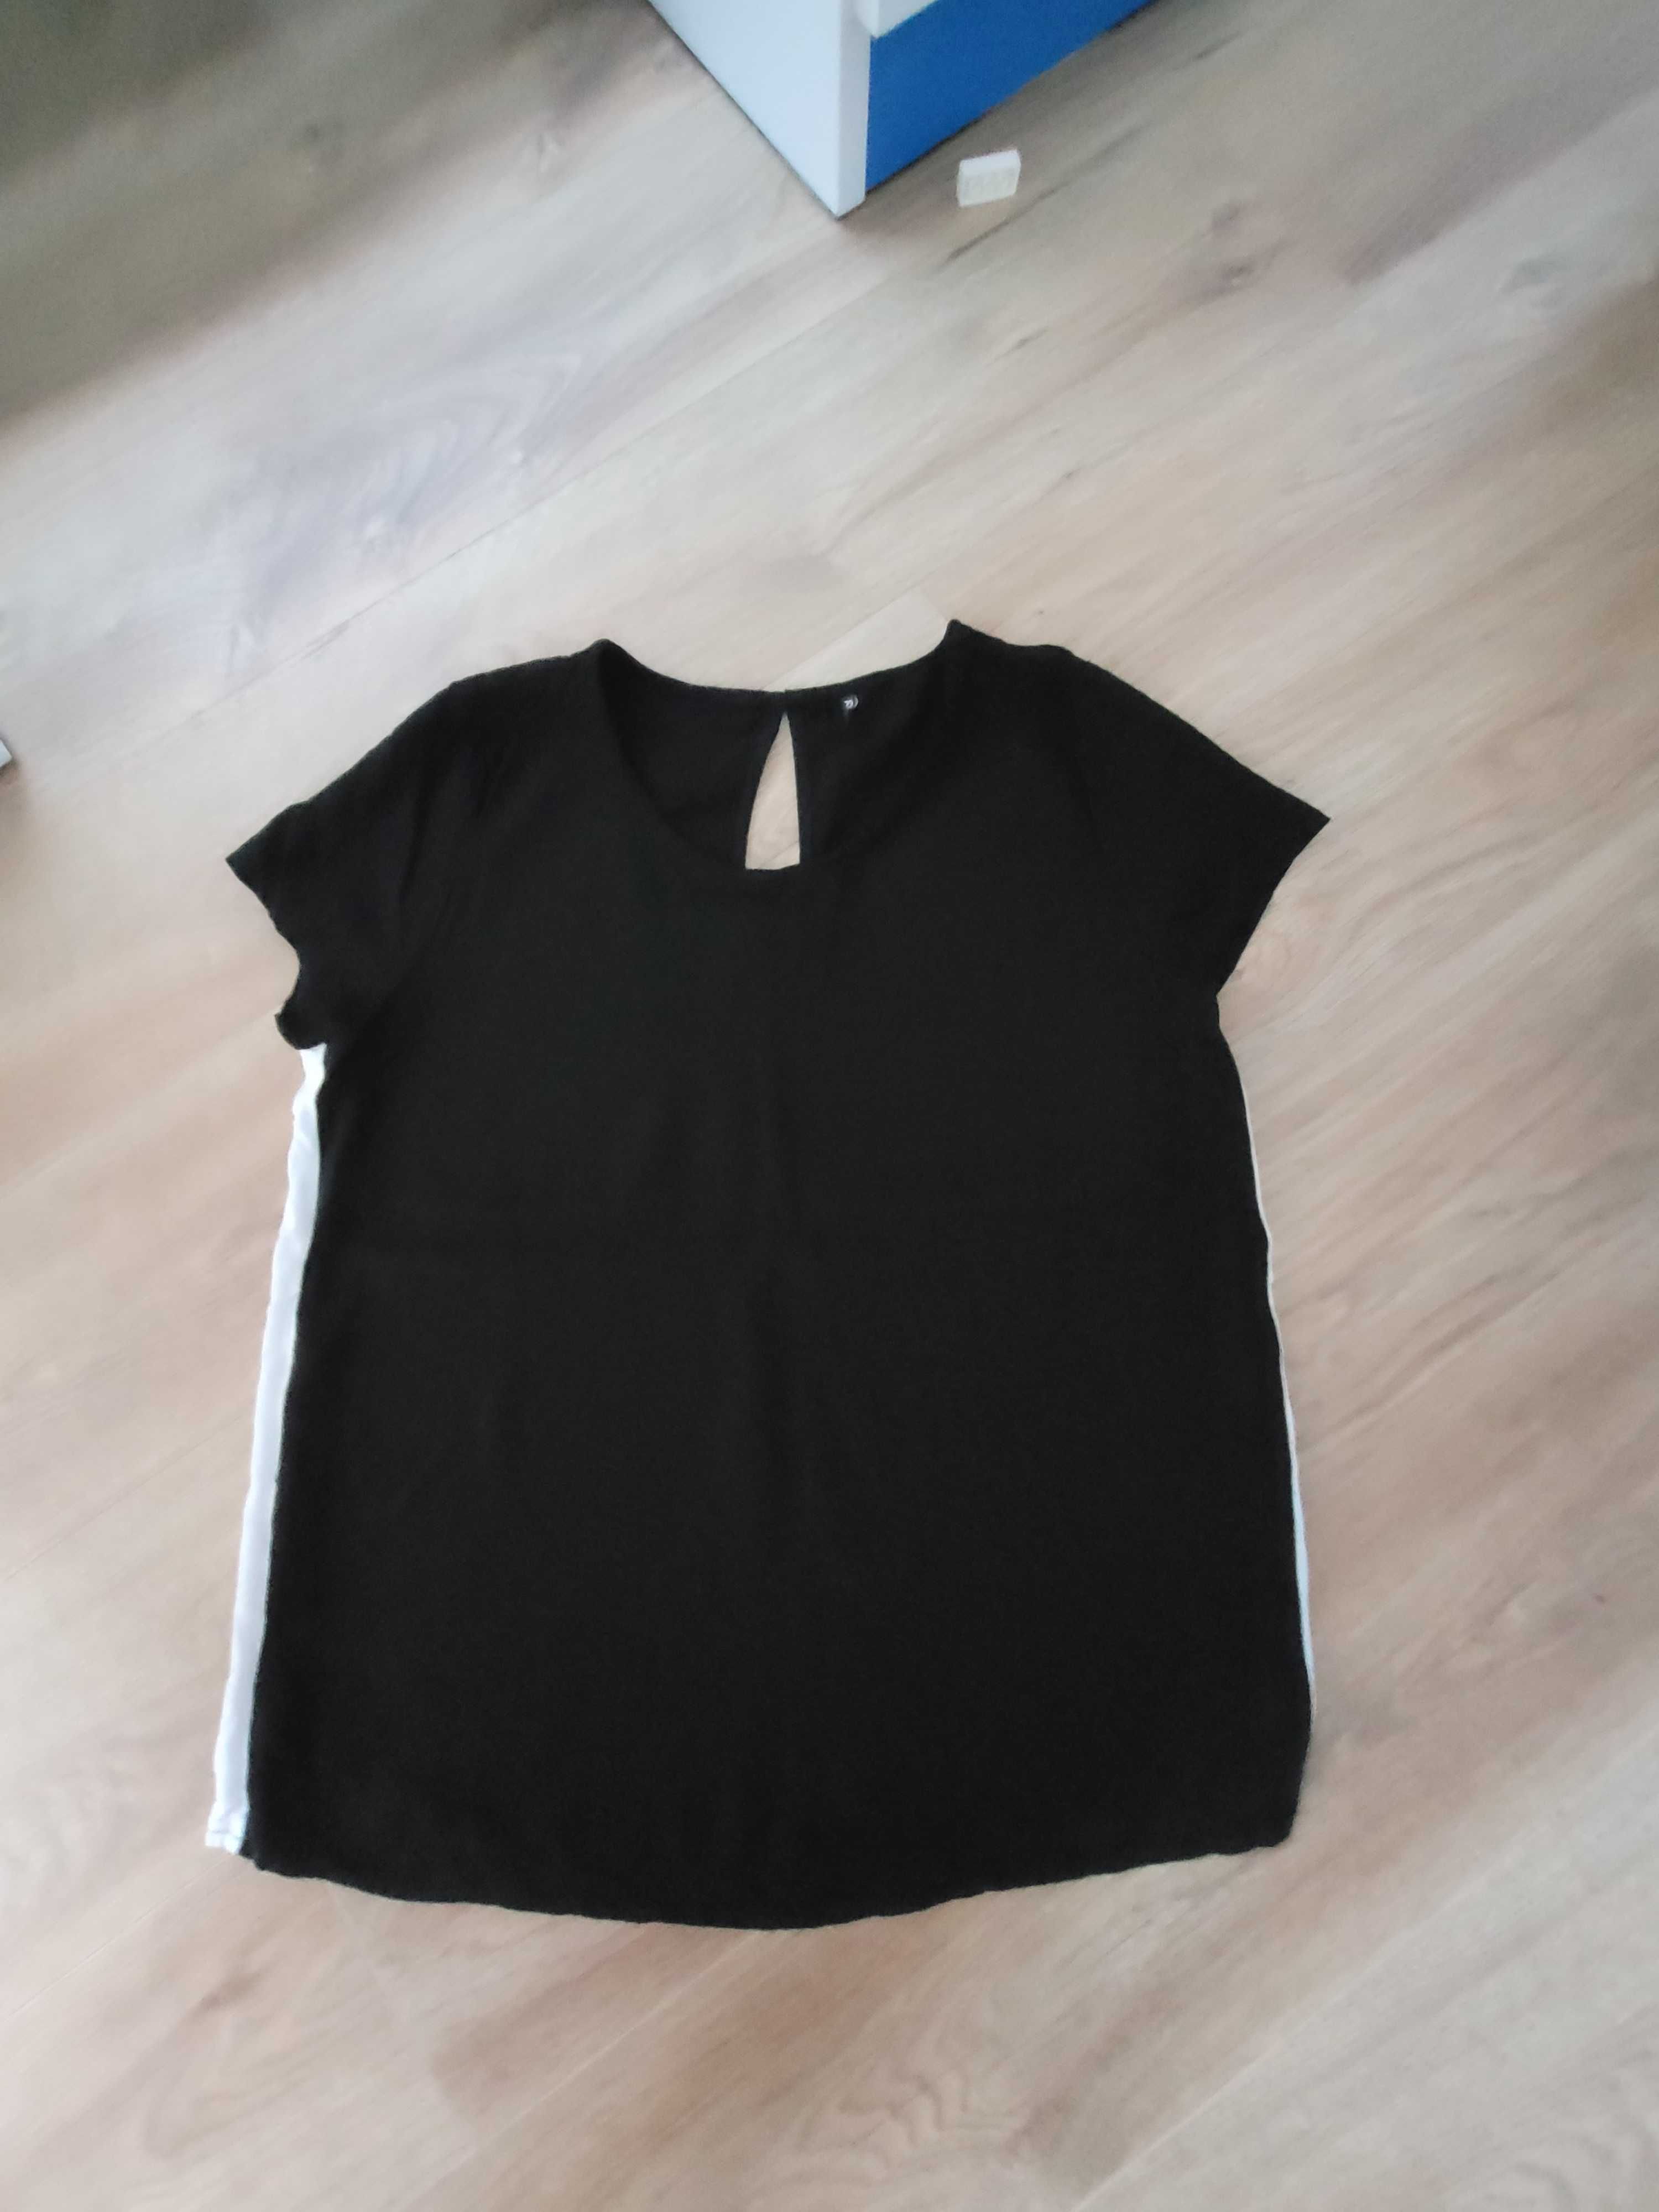 Czarna bluzka t-shirt z lampasem S Vero Moda elegancka impreza nowa